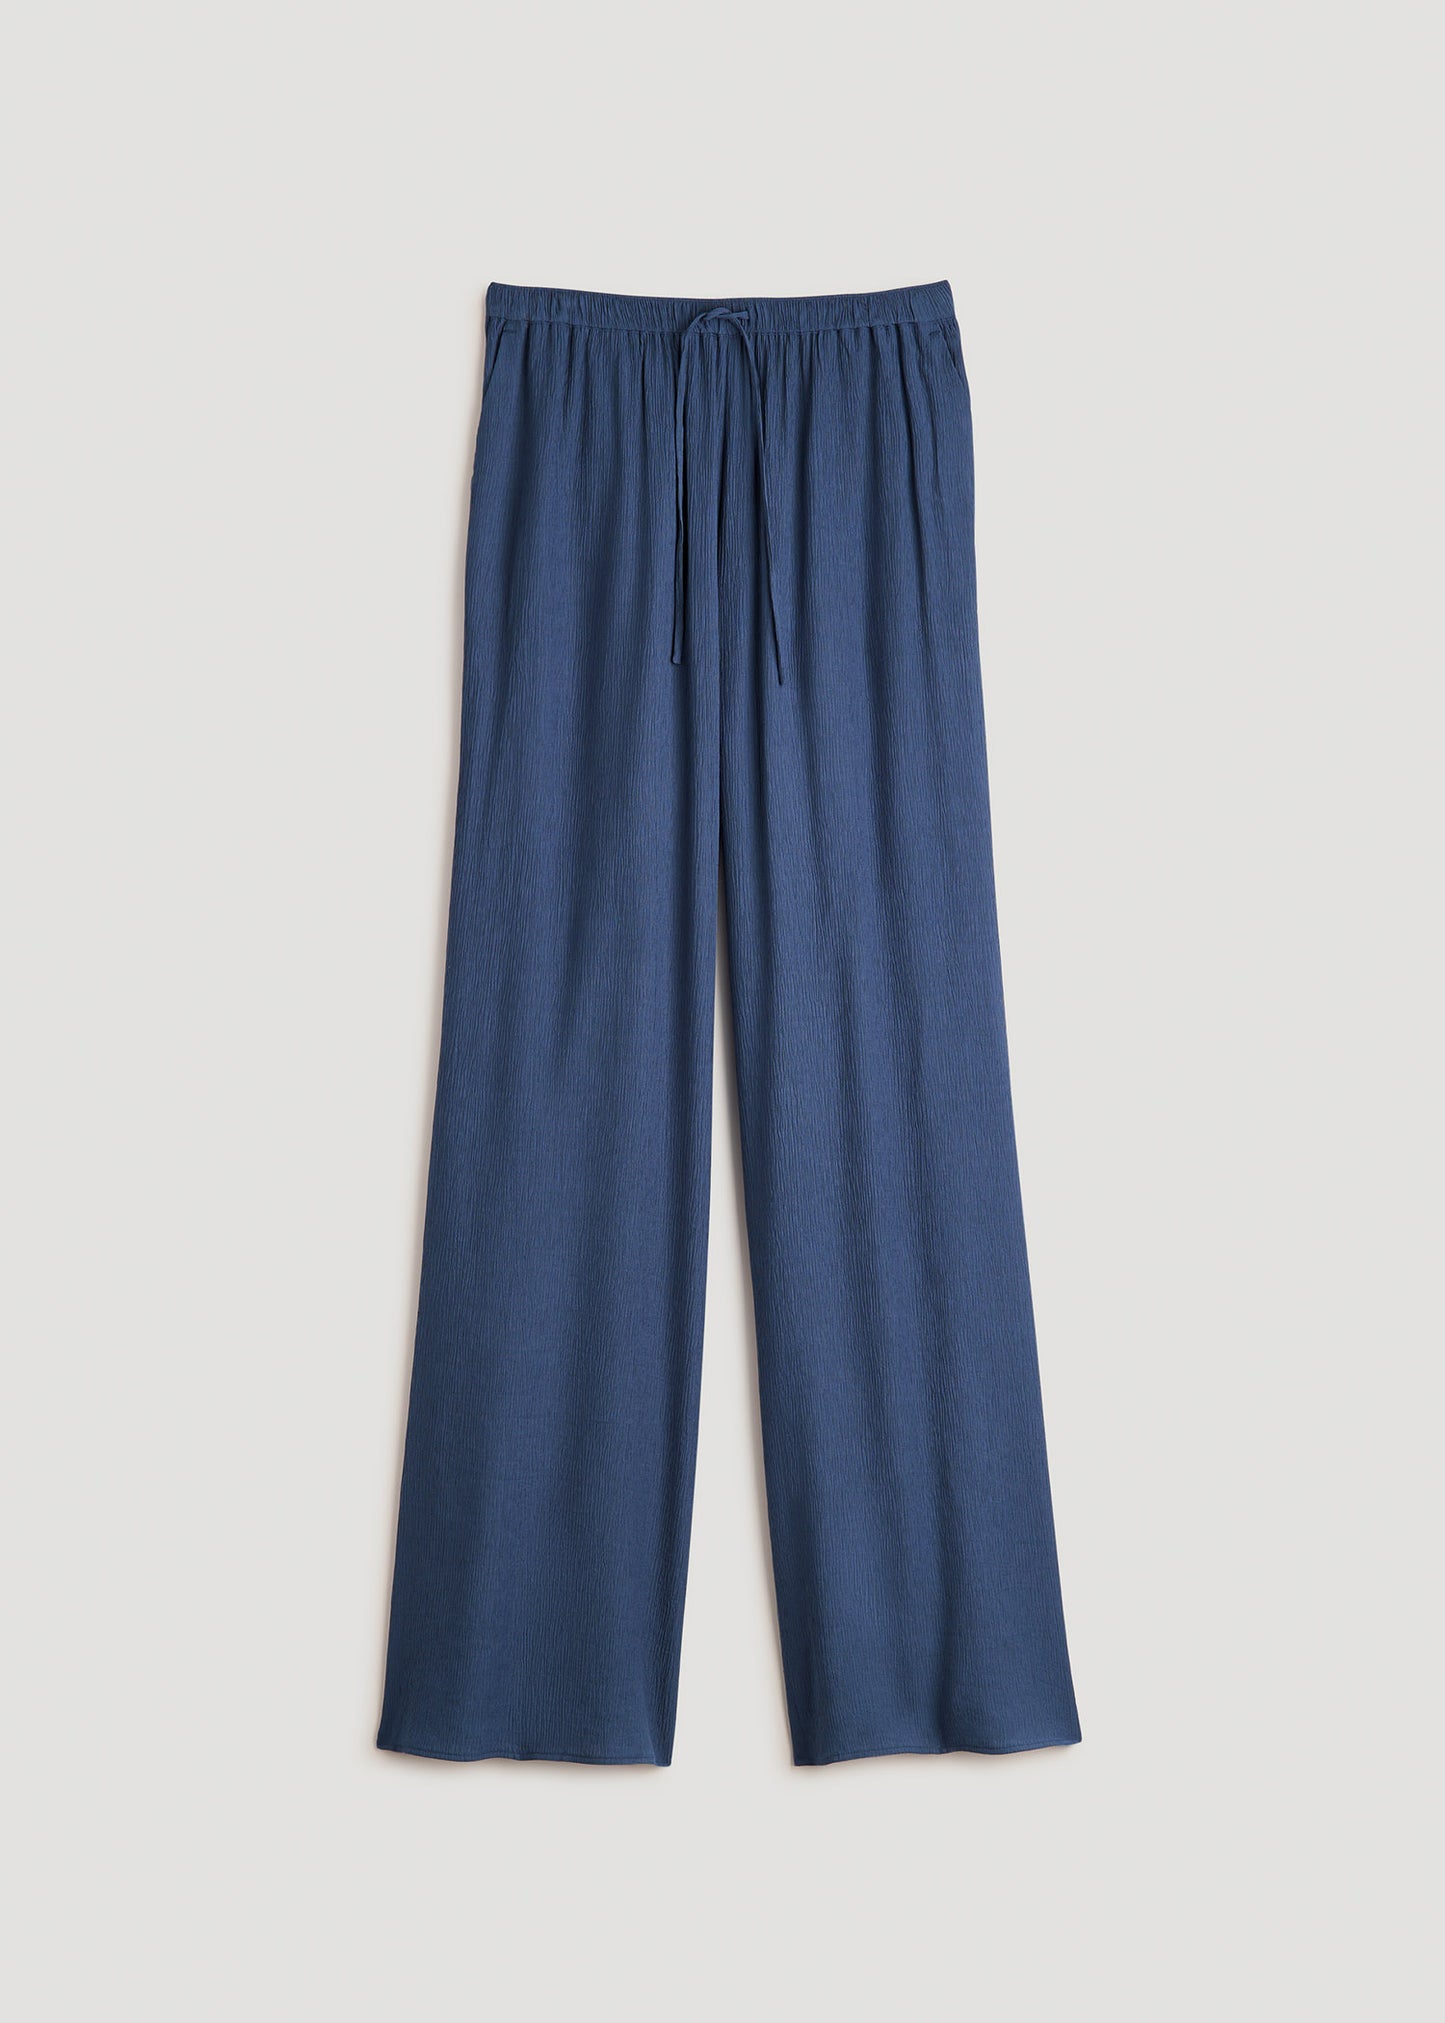 Crinkle Pull-on Wide-leg Pants for Tall Women in Steel Blue